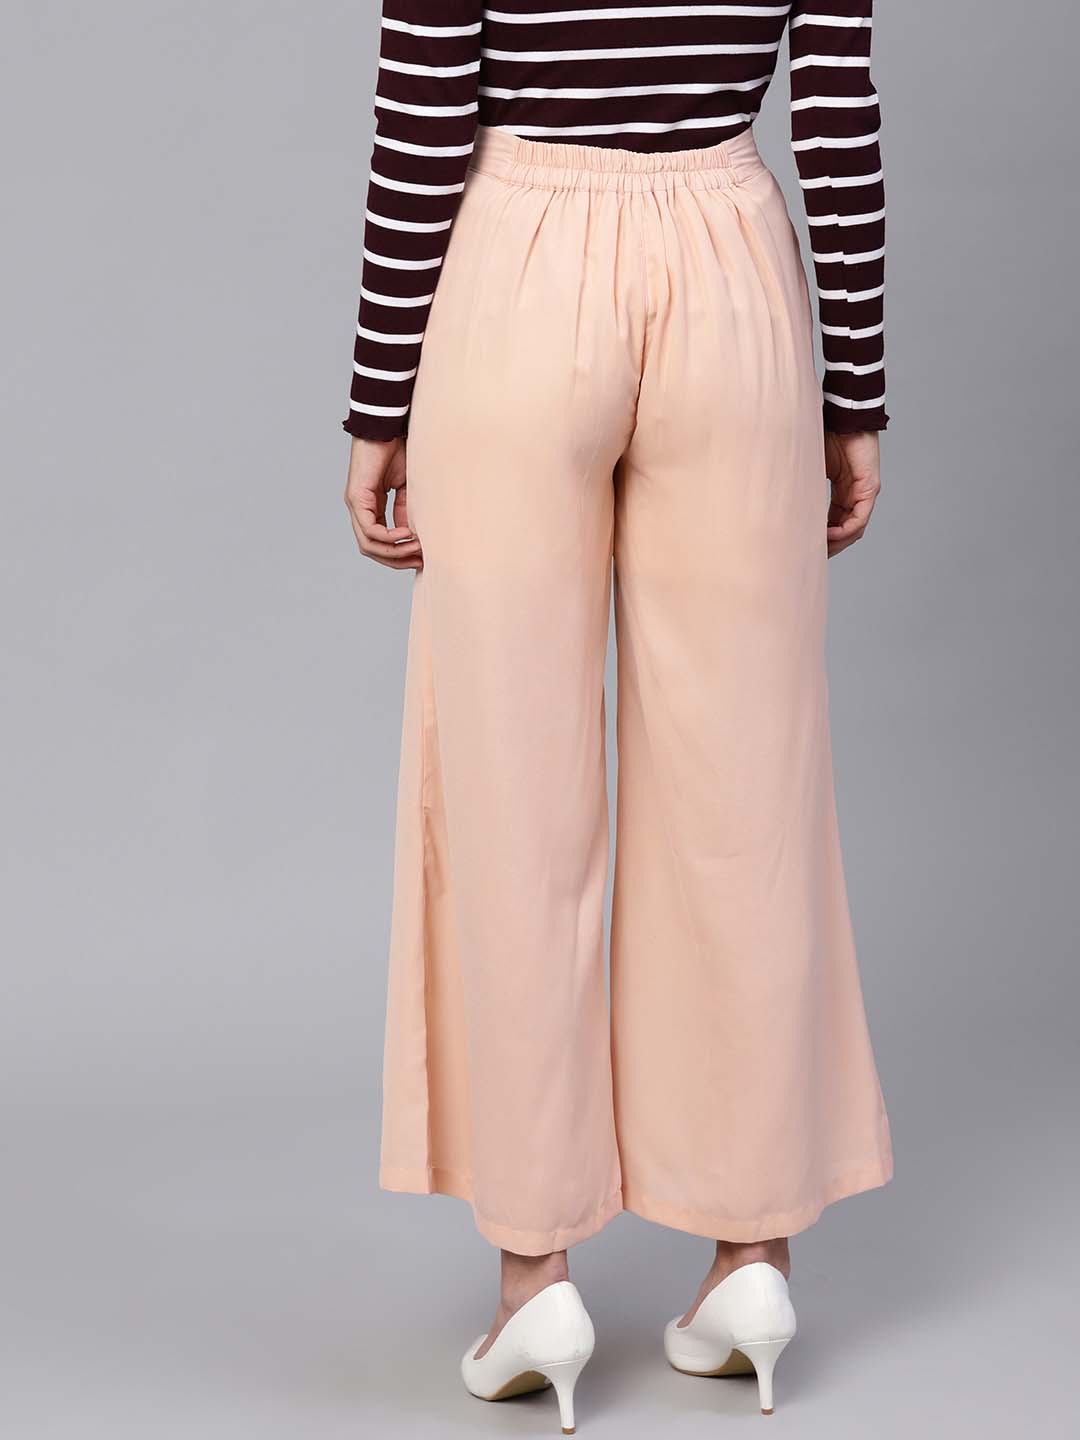 Peach Bow Pants Pink Summer, Light Summer Pants, Peach Pants, Women Bottom,  Casual Pants - Etsy